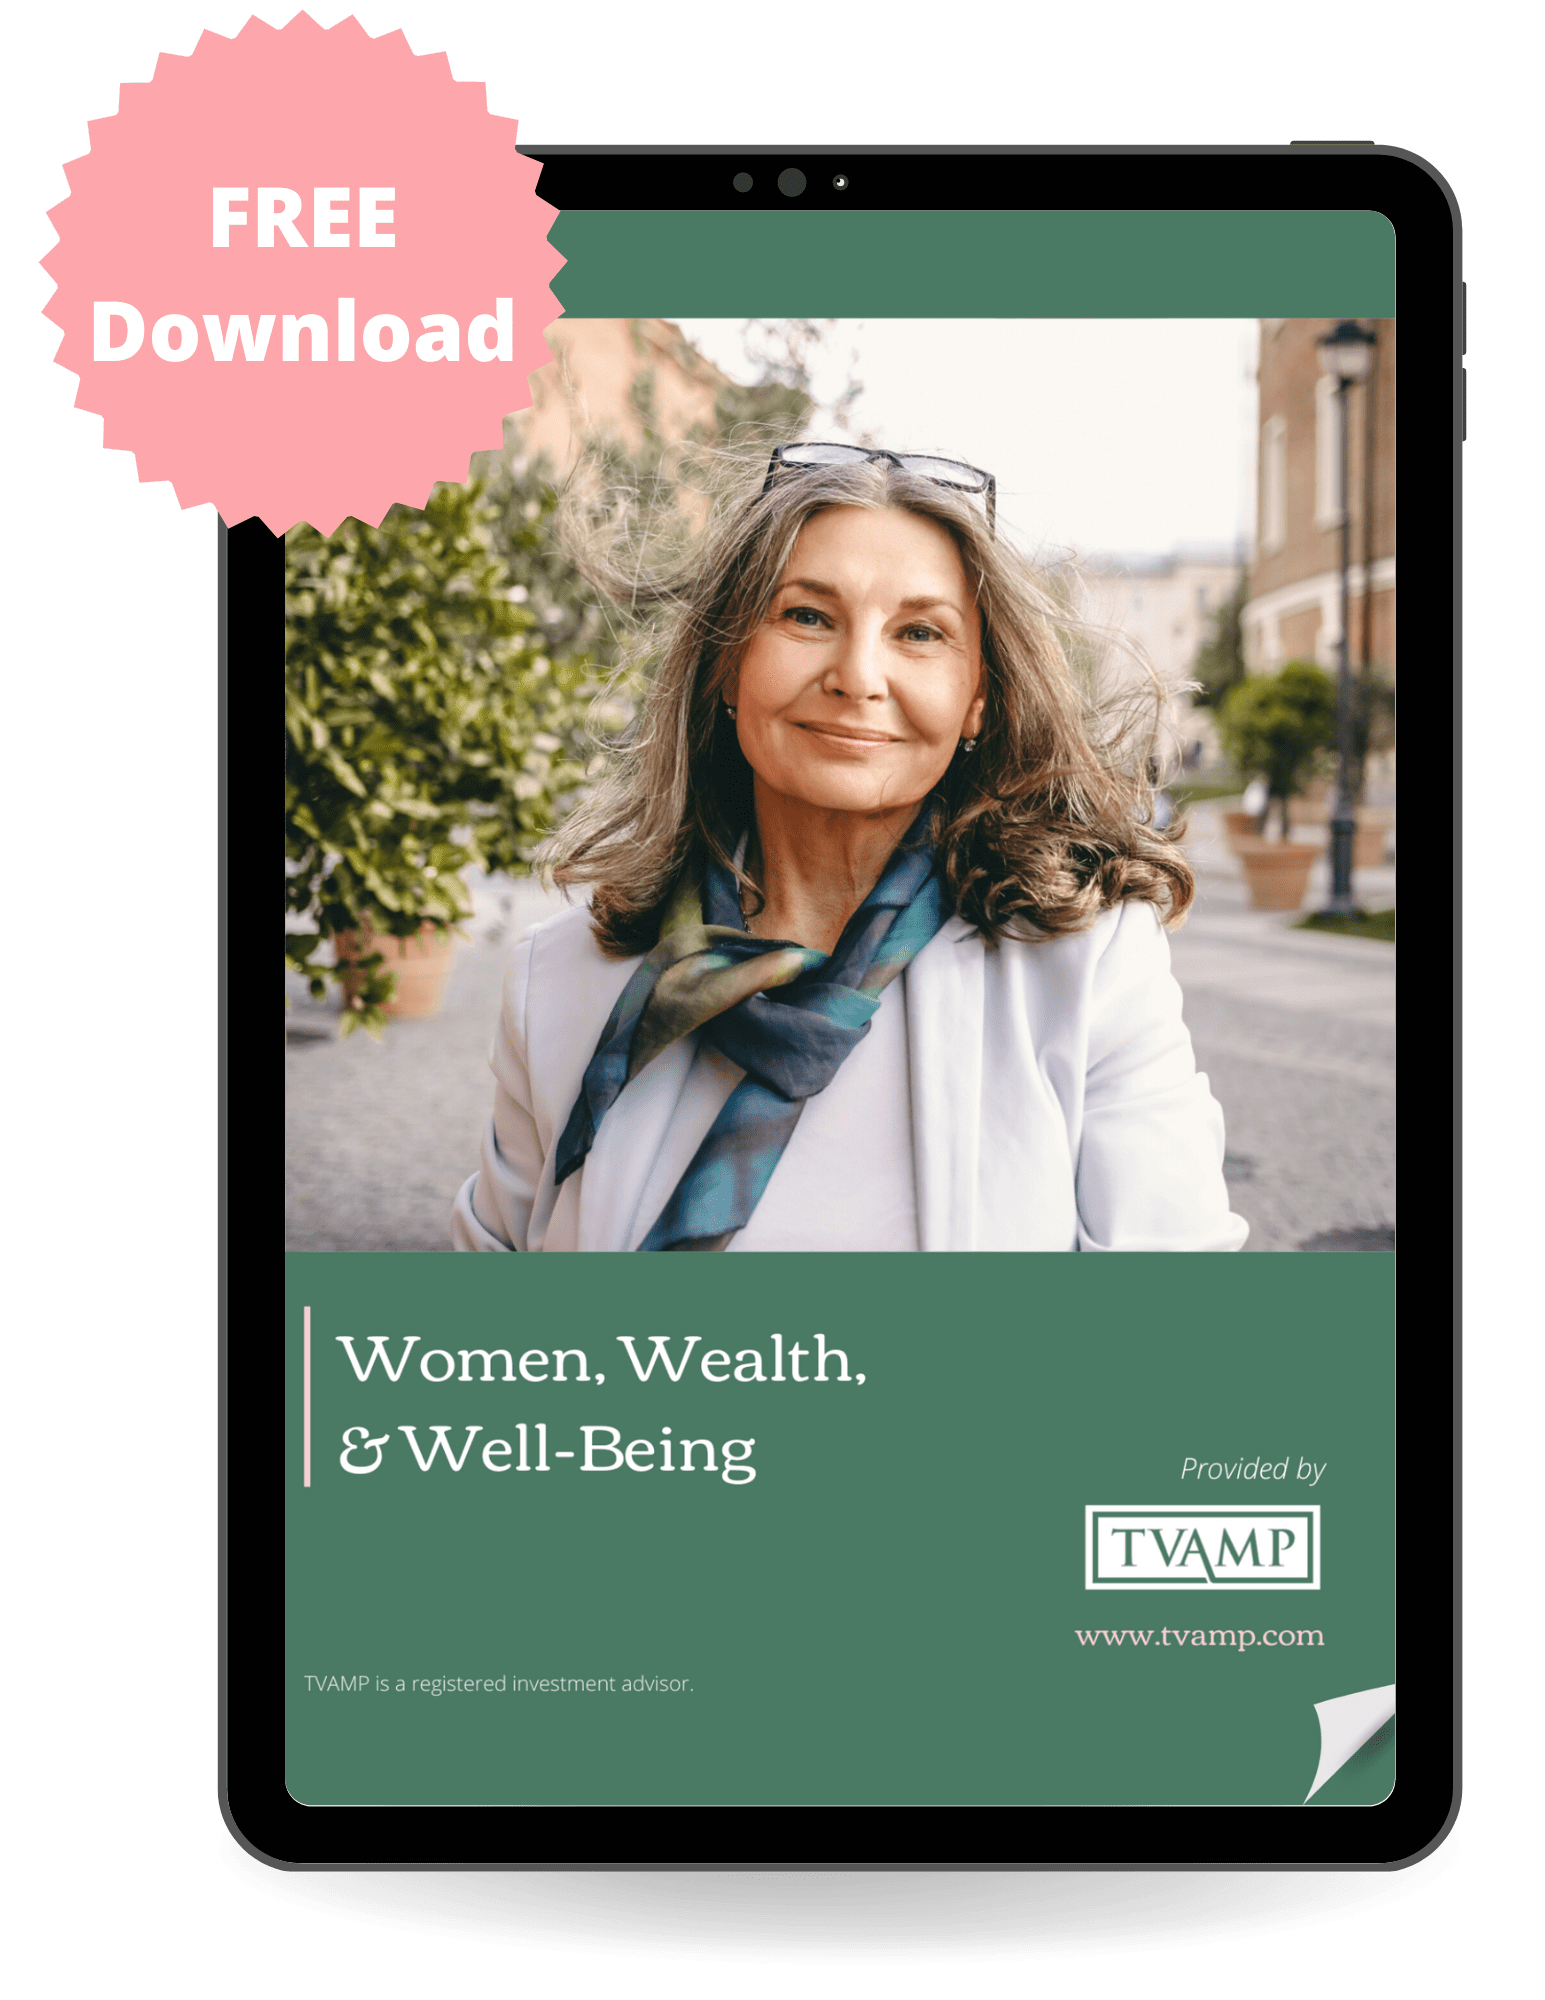 Women, Wealth, & Well-Being financial guide